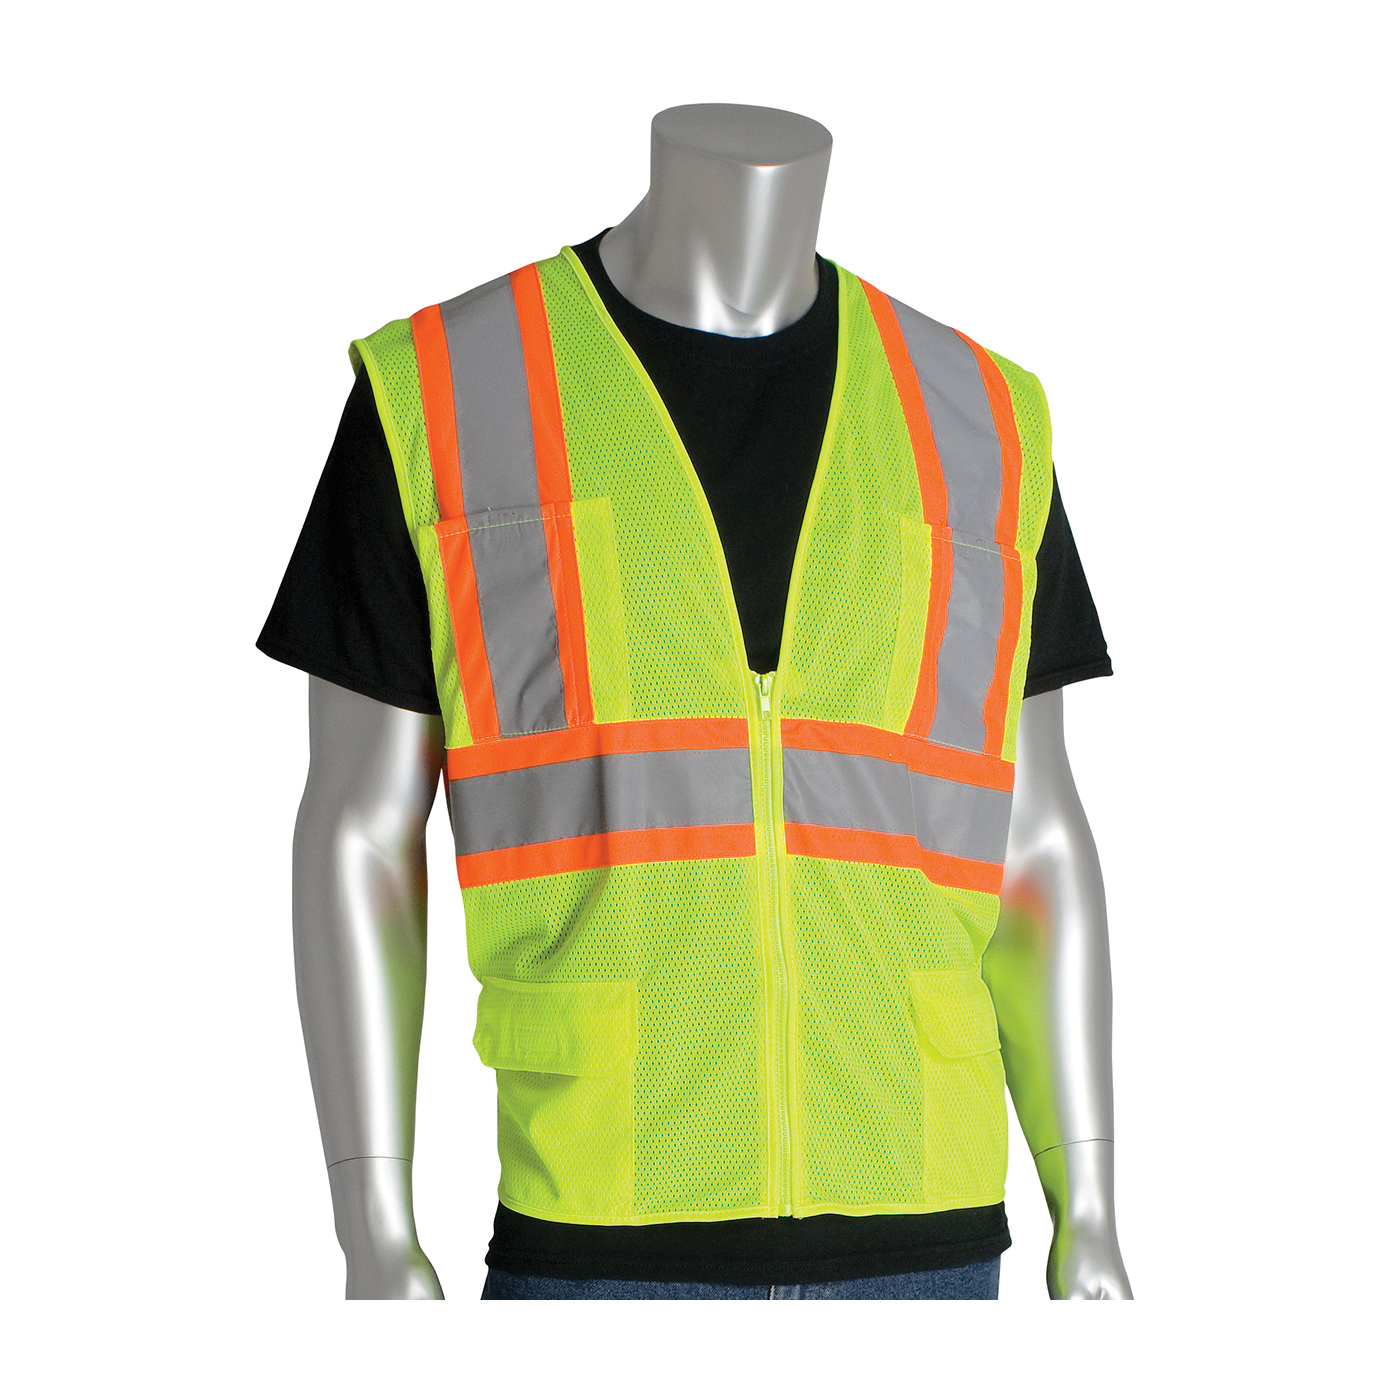 PIP® 302-MVZPLY-M 2-Tone Safety Vest, M, Hi-Viz Lime Yellow, Polyester Mesh, Zipper Closure, 6 Pockets, ANSI Class: Class 2, Specifications Met: ANSI 107 Type R